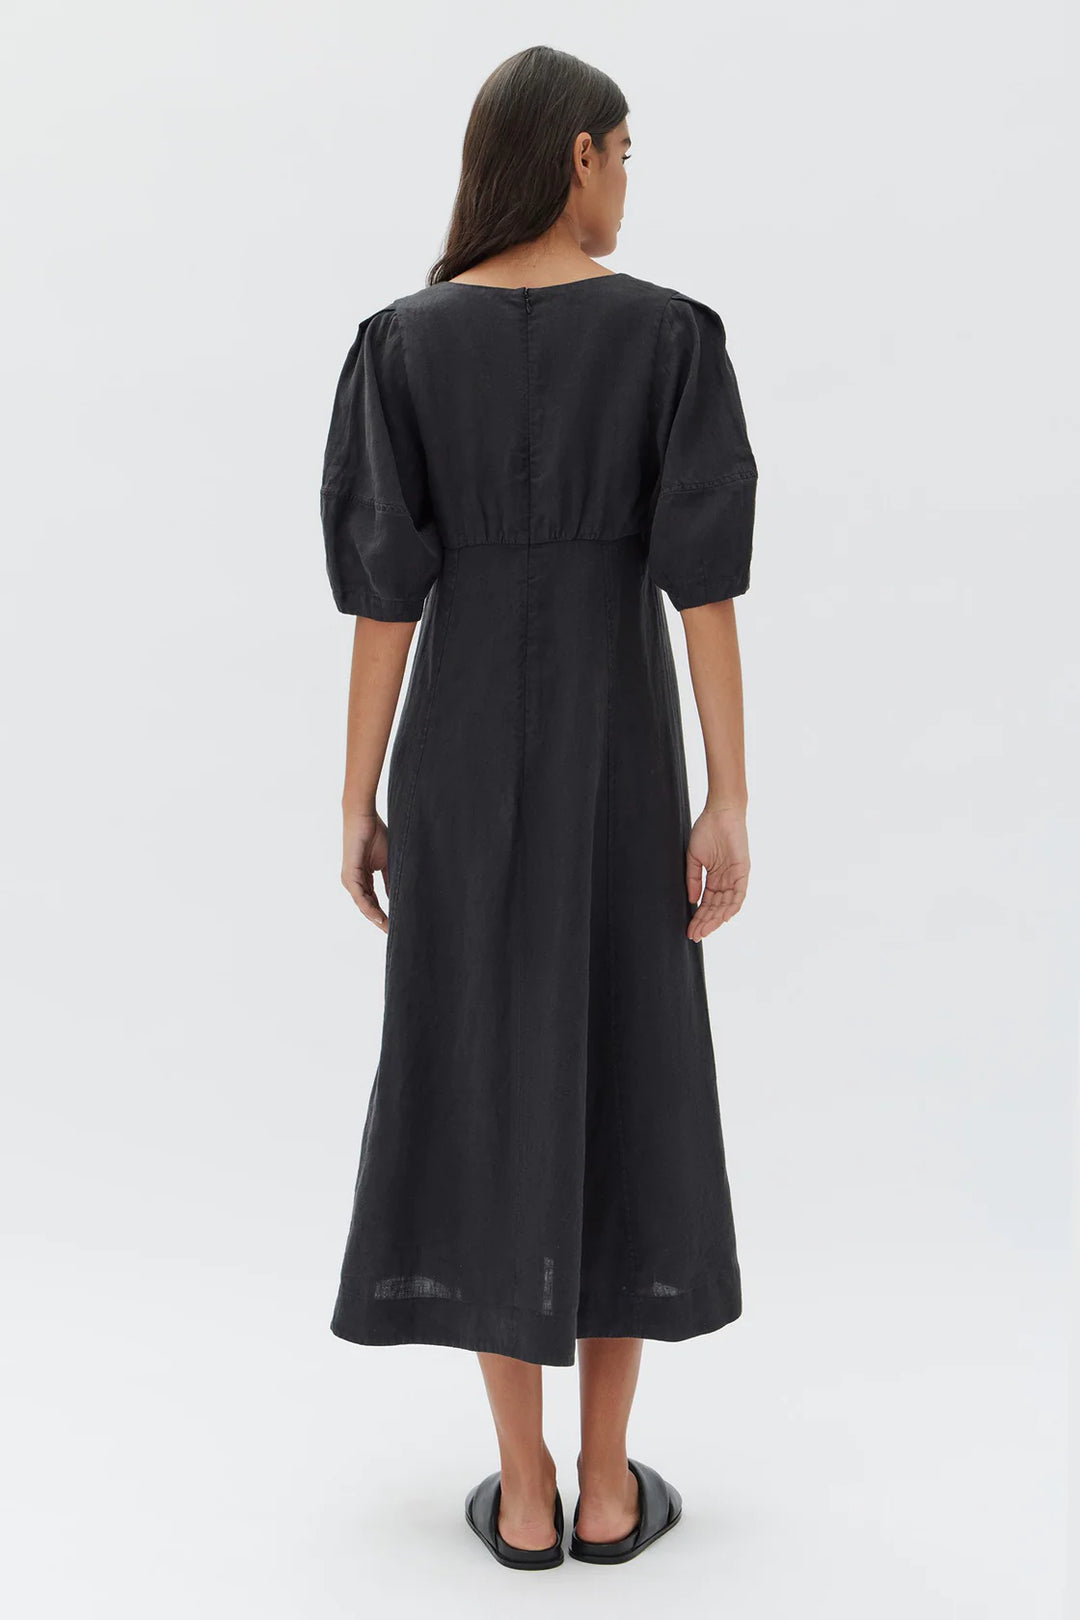 Assembly label tia linen dress- black